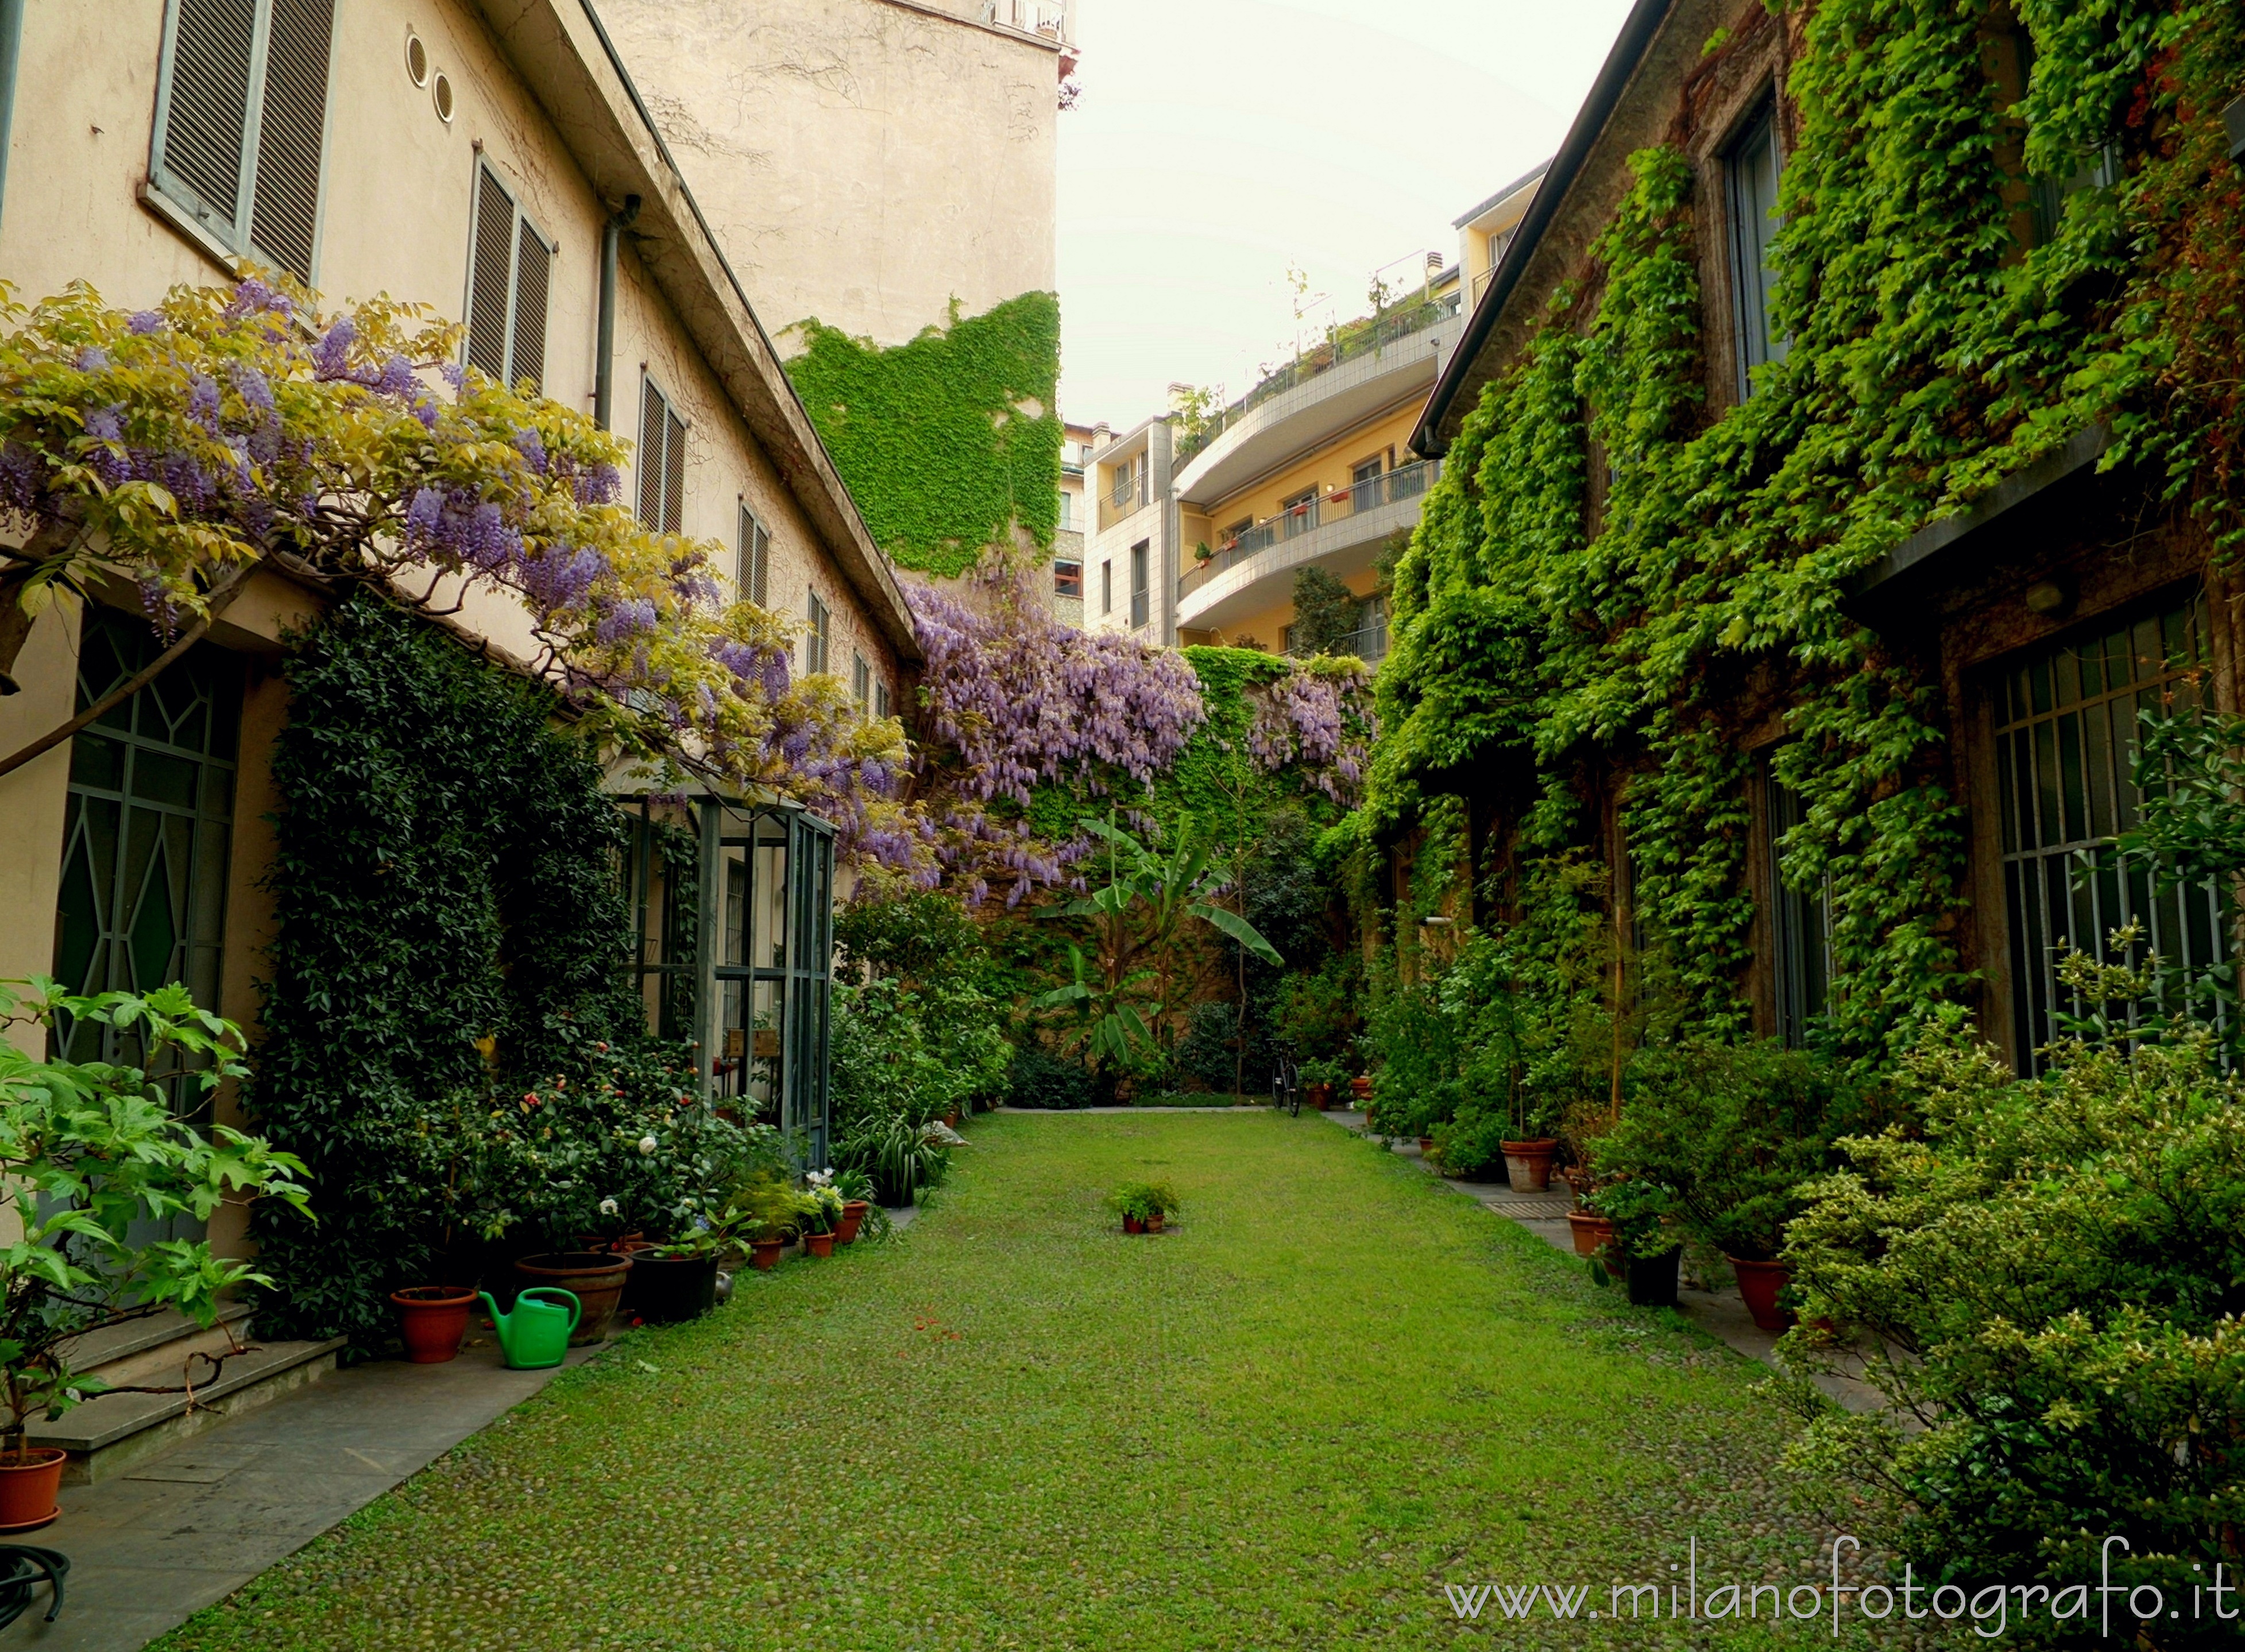 Milan (Italy): Flowered courtyard in Corso Garibaldi - Milan (Italy)